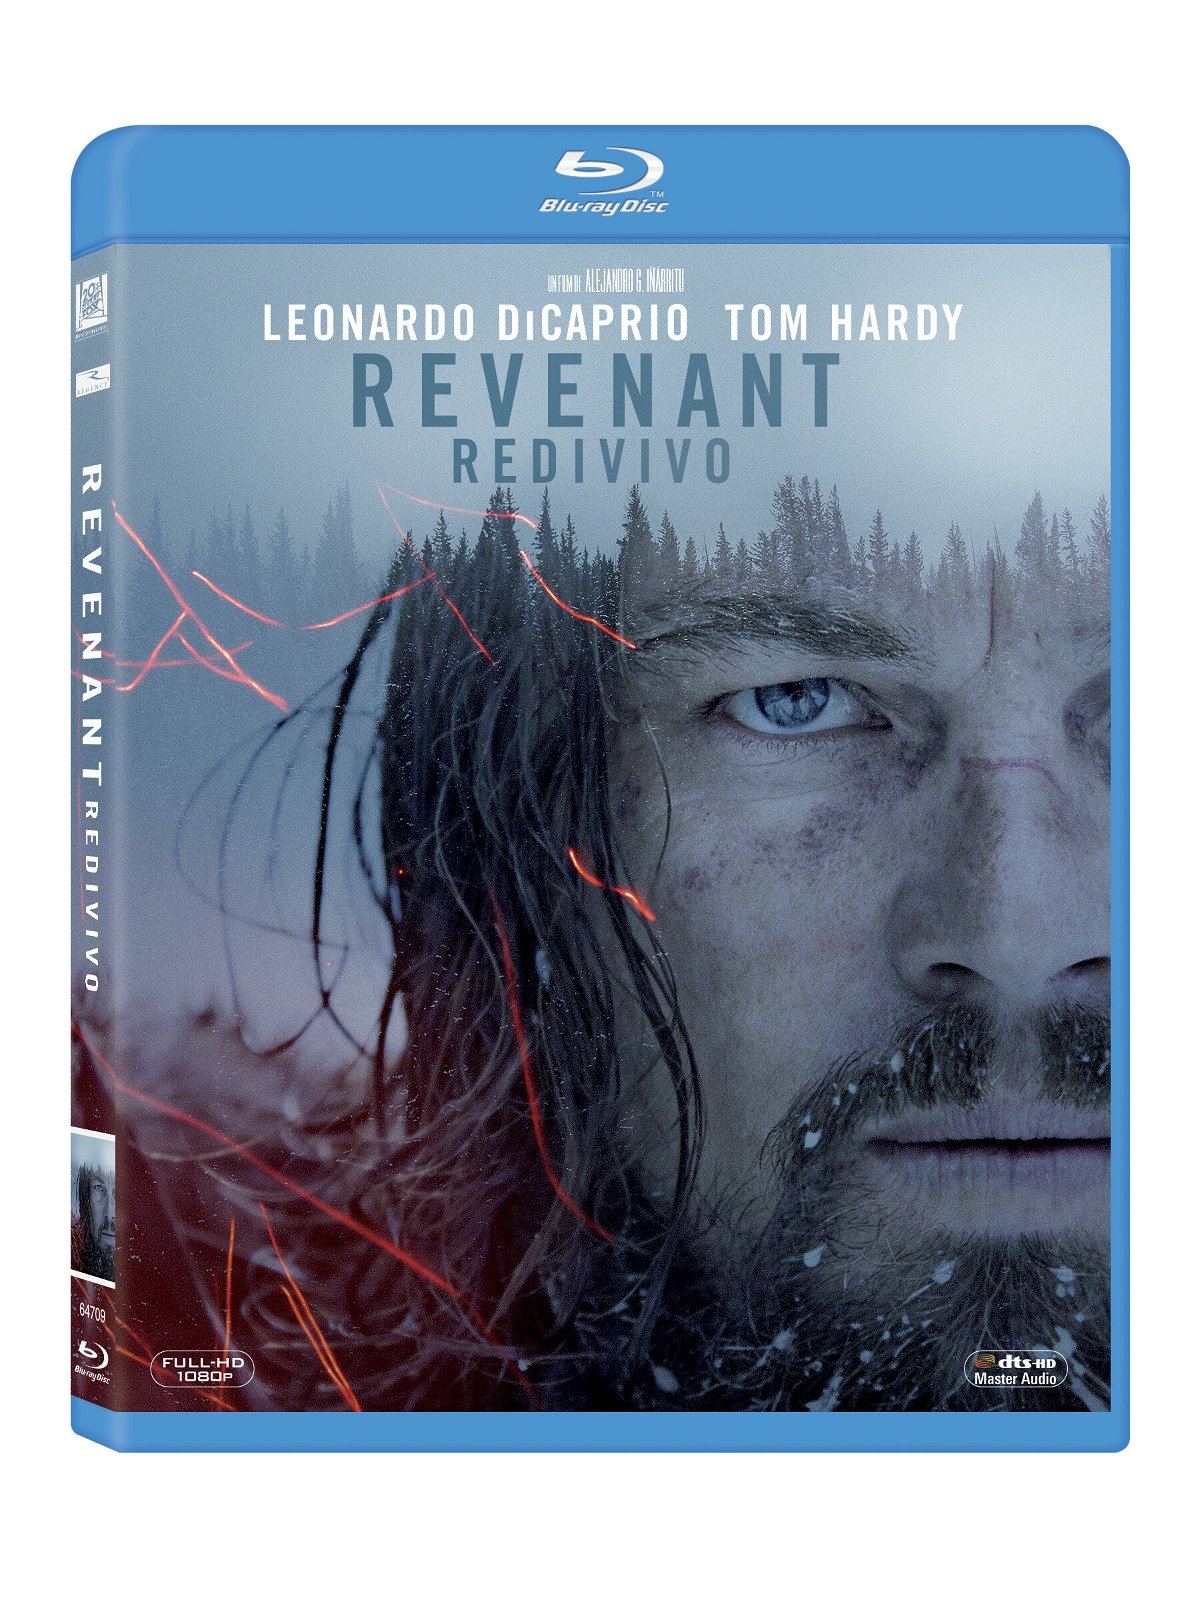 Revenant - Redivivo in Blu-Ray dal 5 maggio